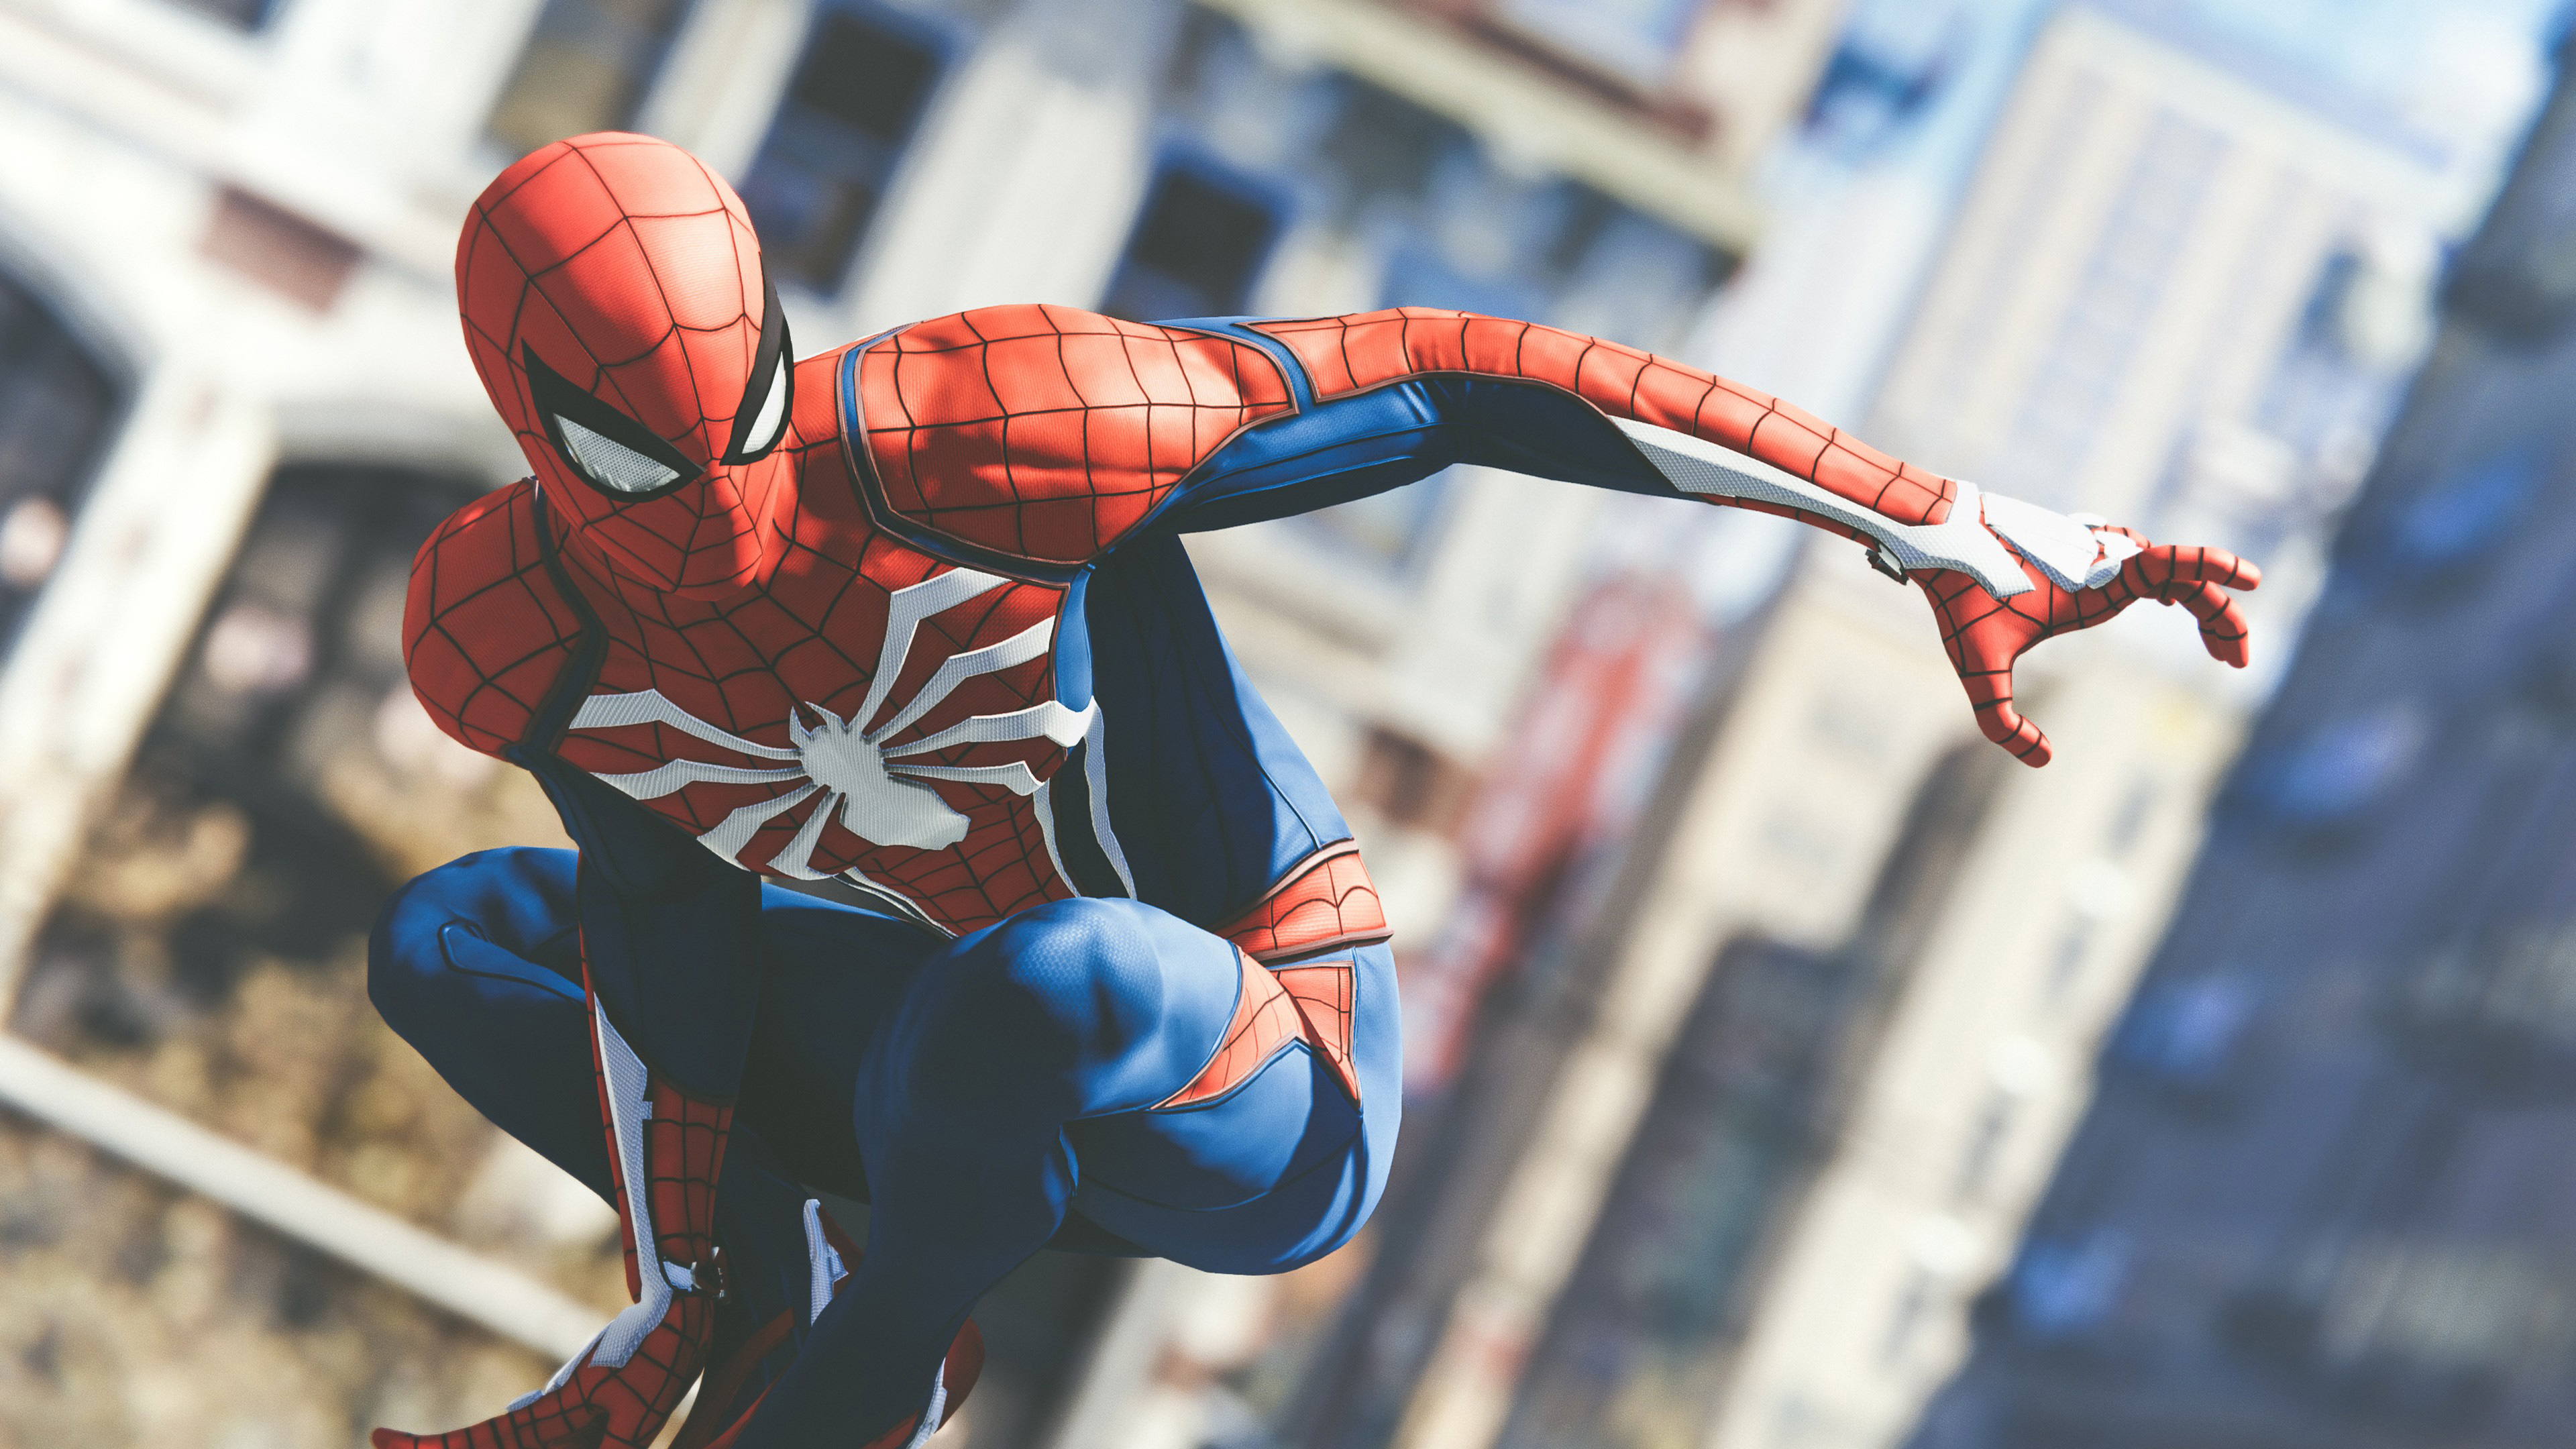 Marvels Spider Man Wallpapers in Ultra HD 4K   Gameranx